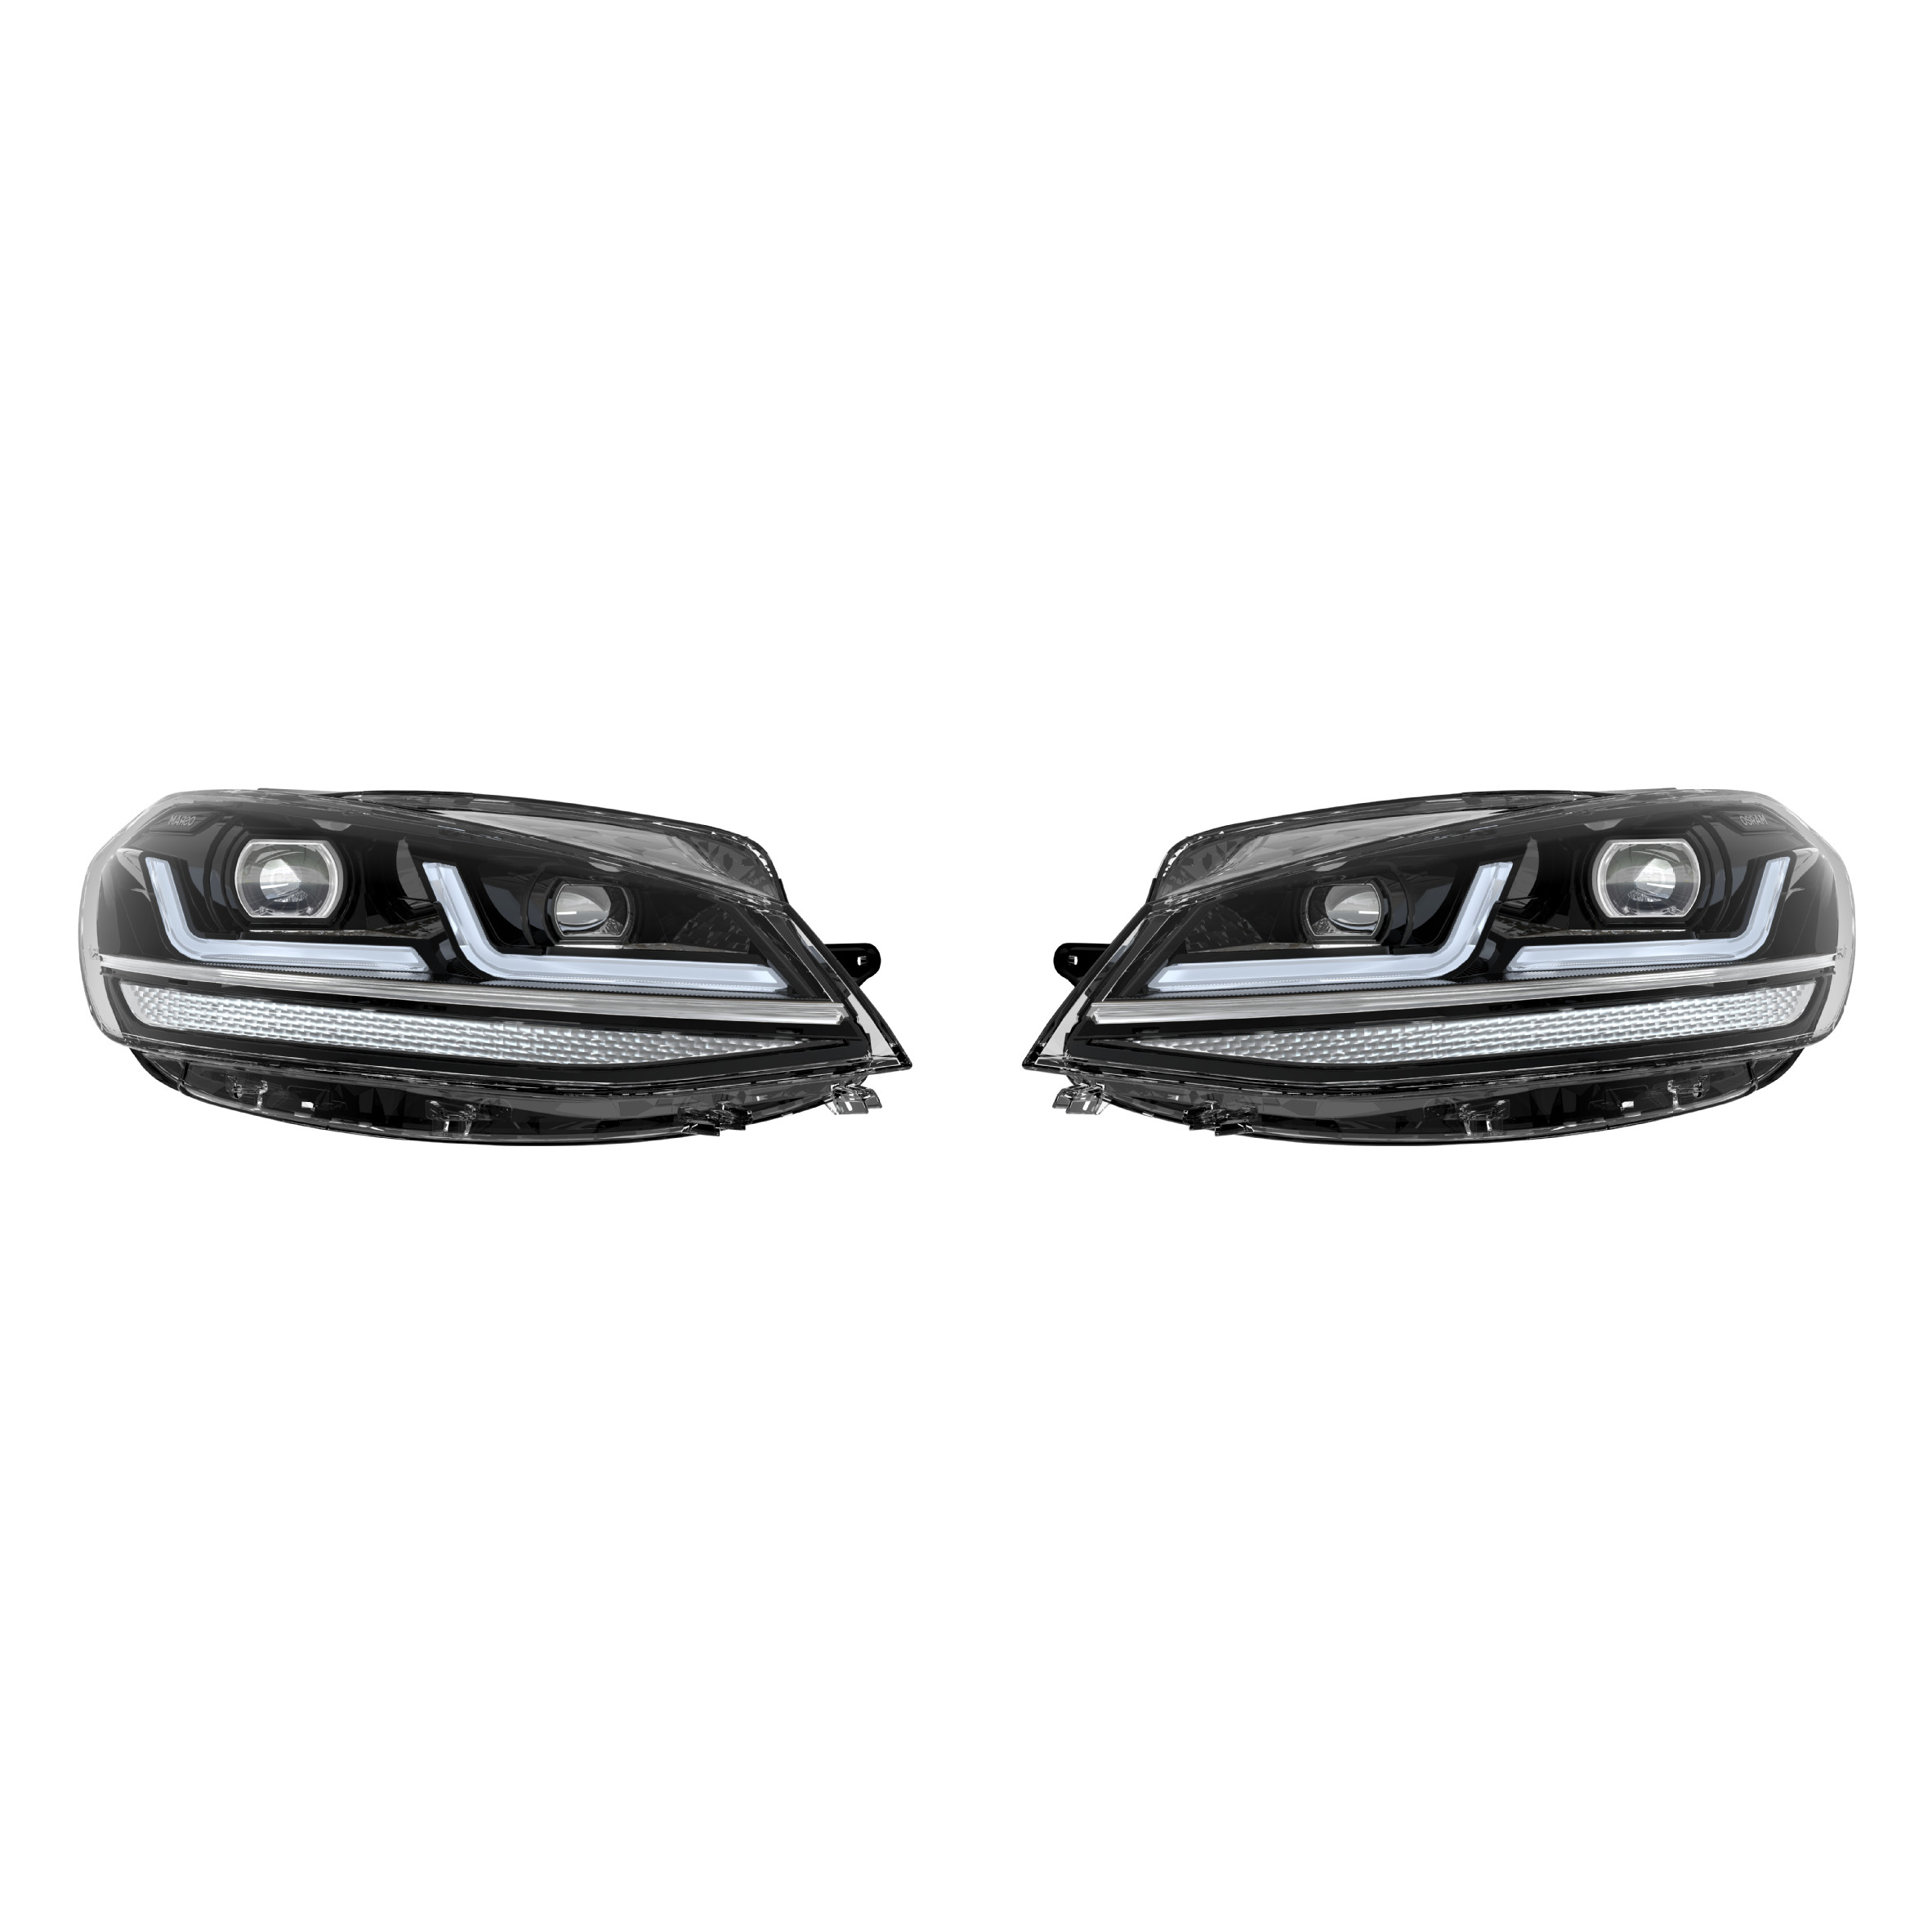 OSRAM LEDriving® Golf VII Facelift Scheinwerfer, Black Editi